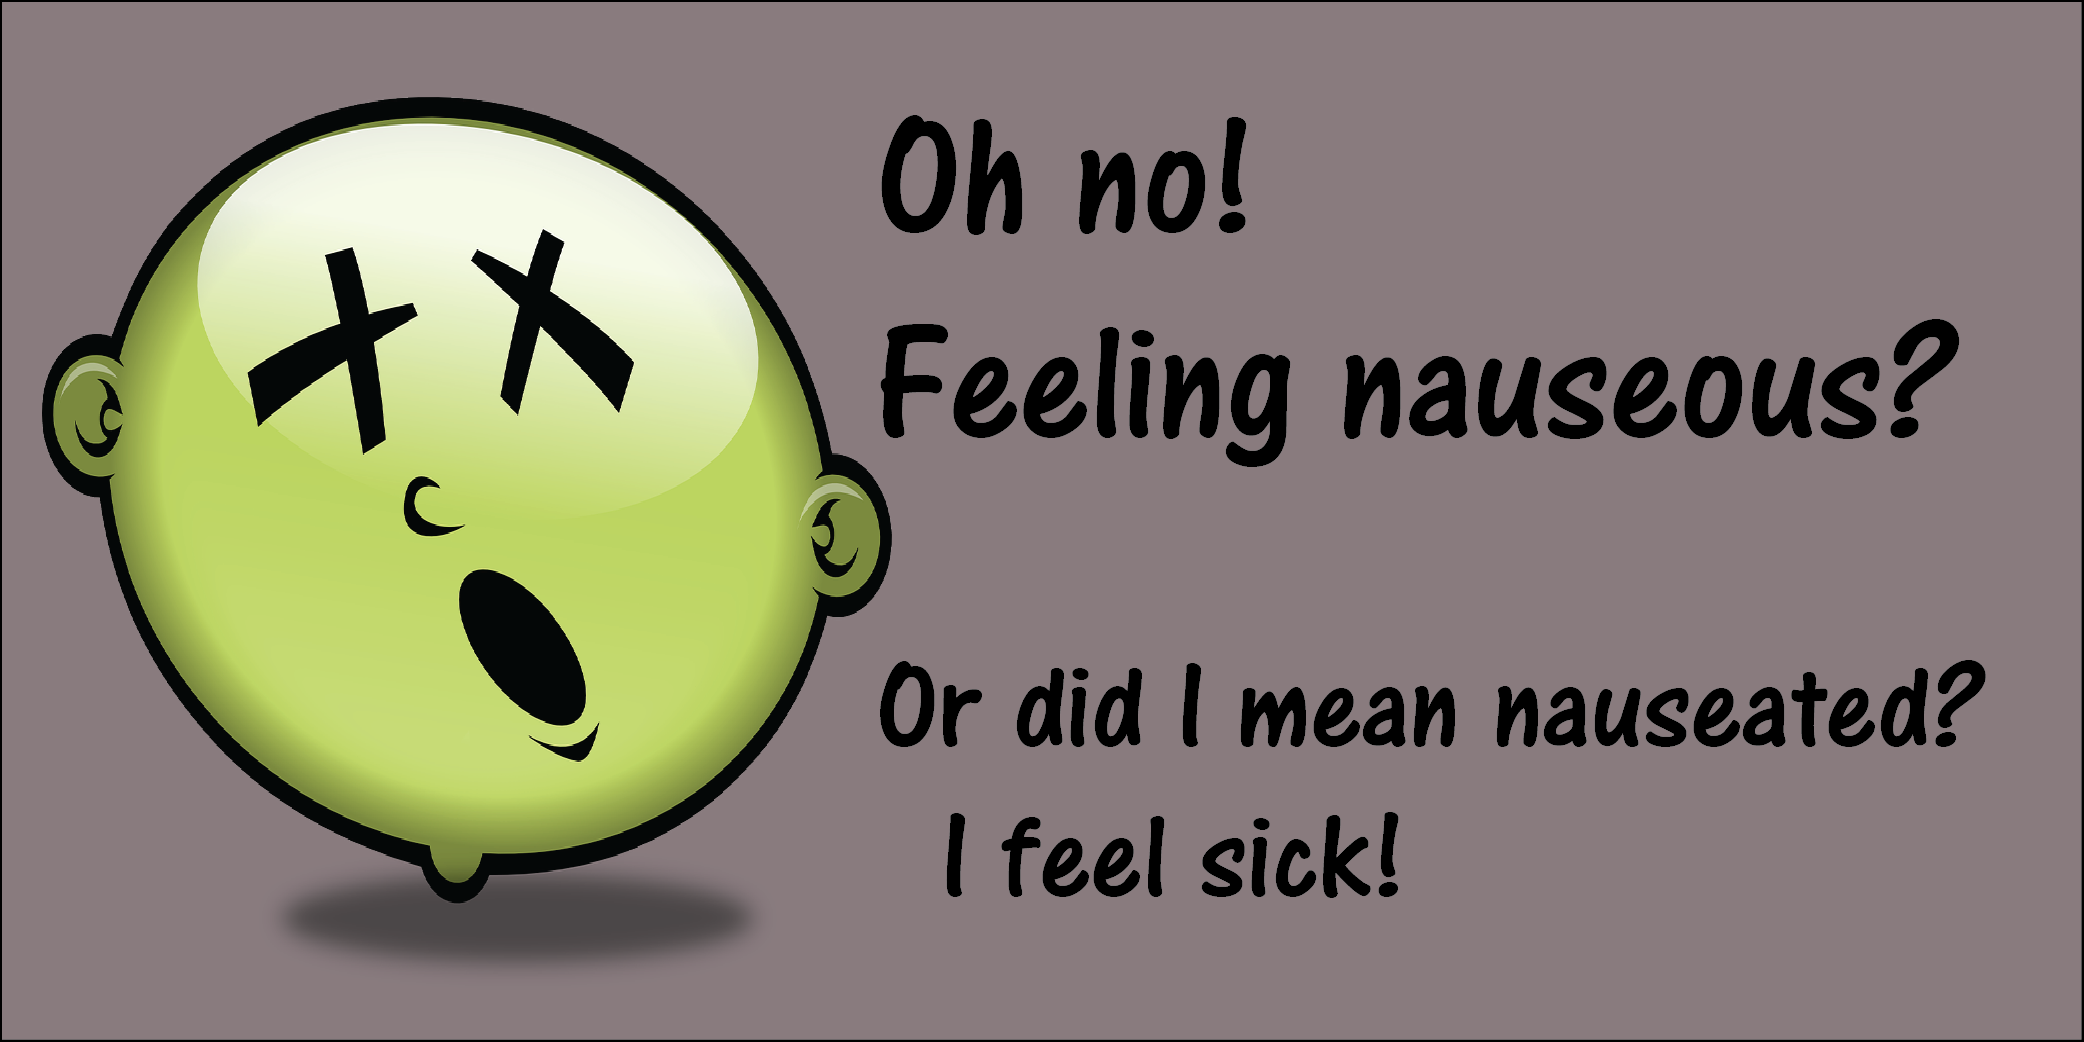 Nauseous vs nauseated